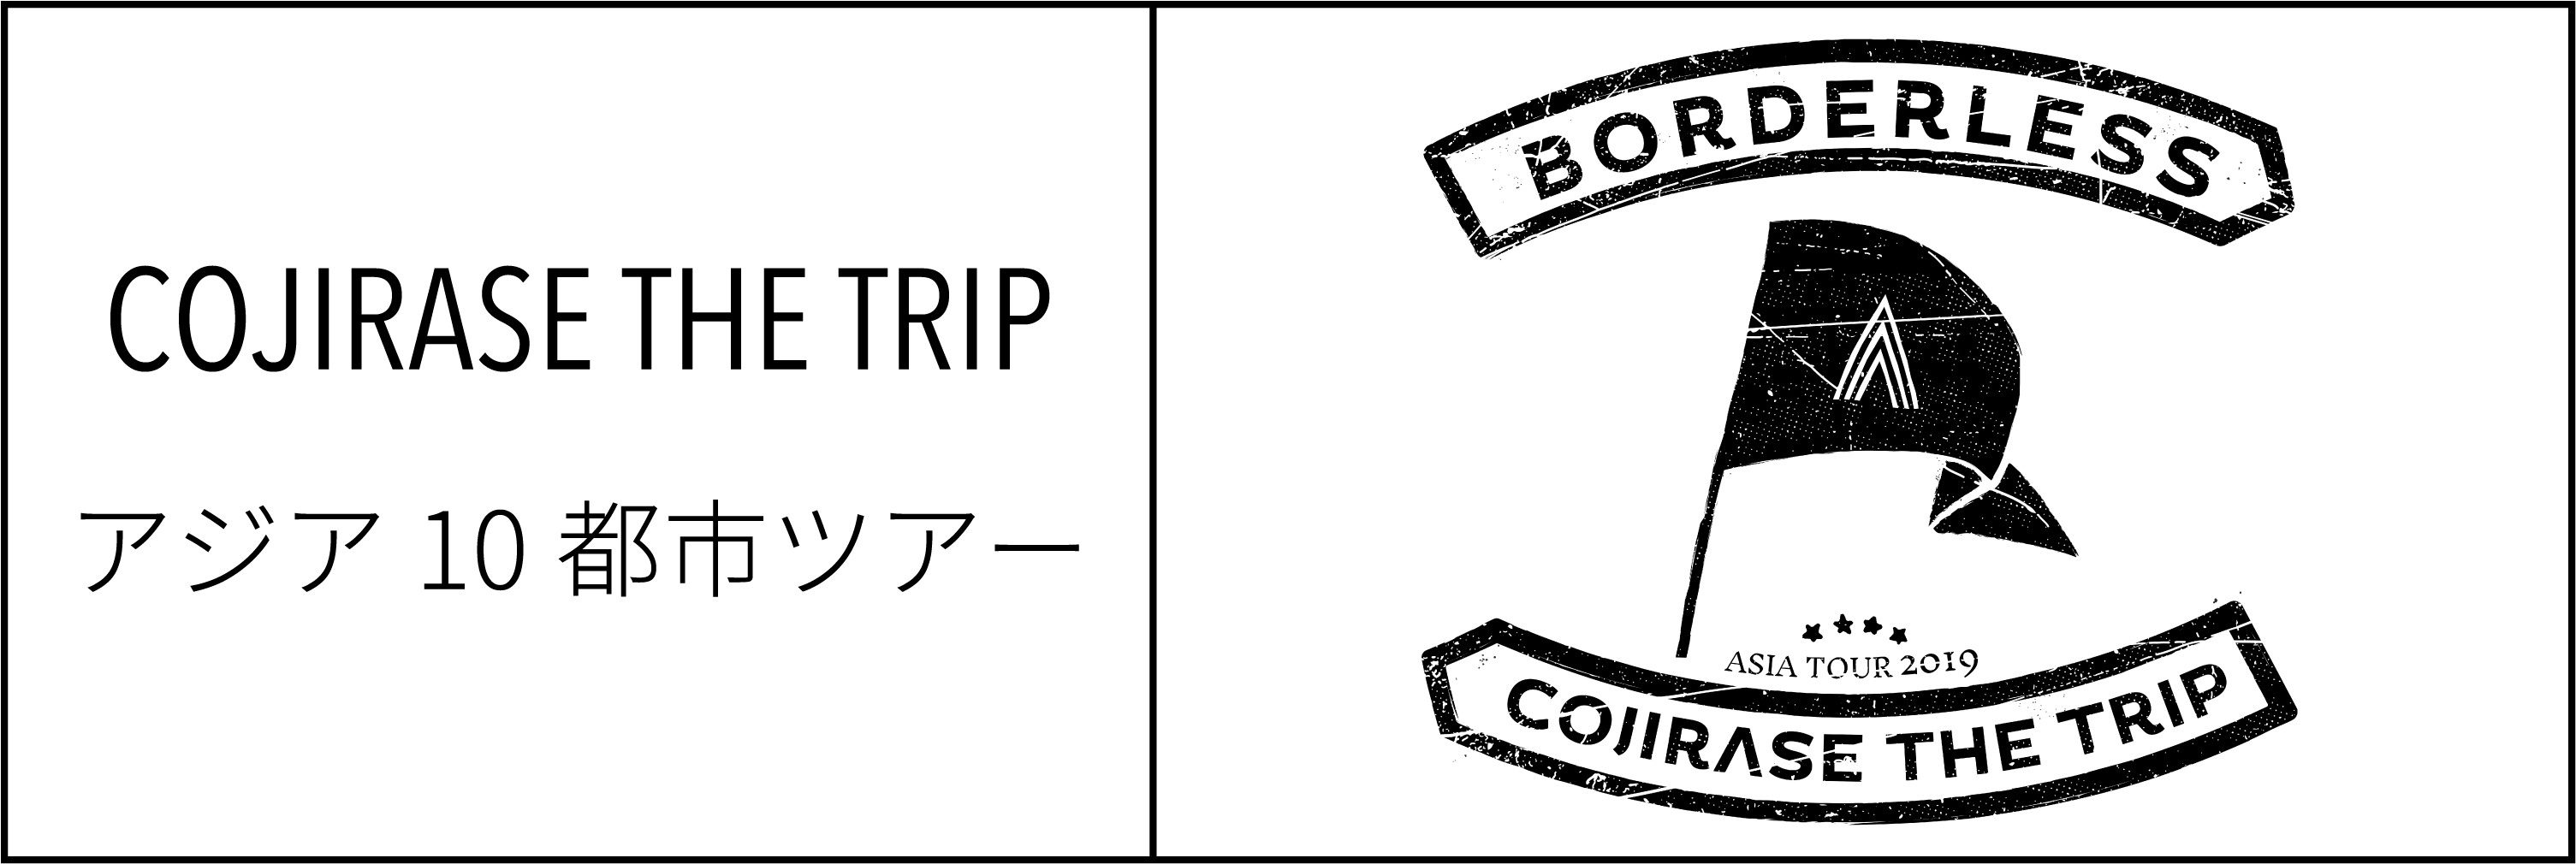 COJIRASE THE TRIP 全国10都市ツアー「BORDERLESS」